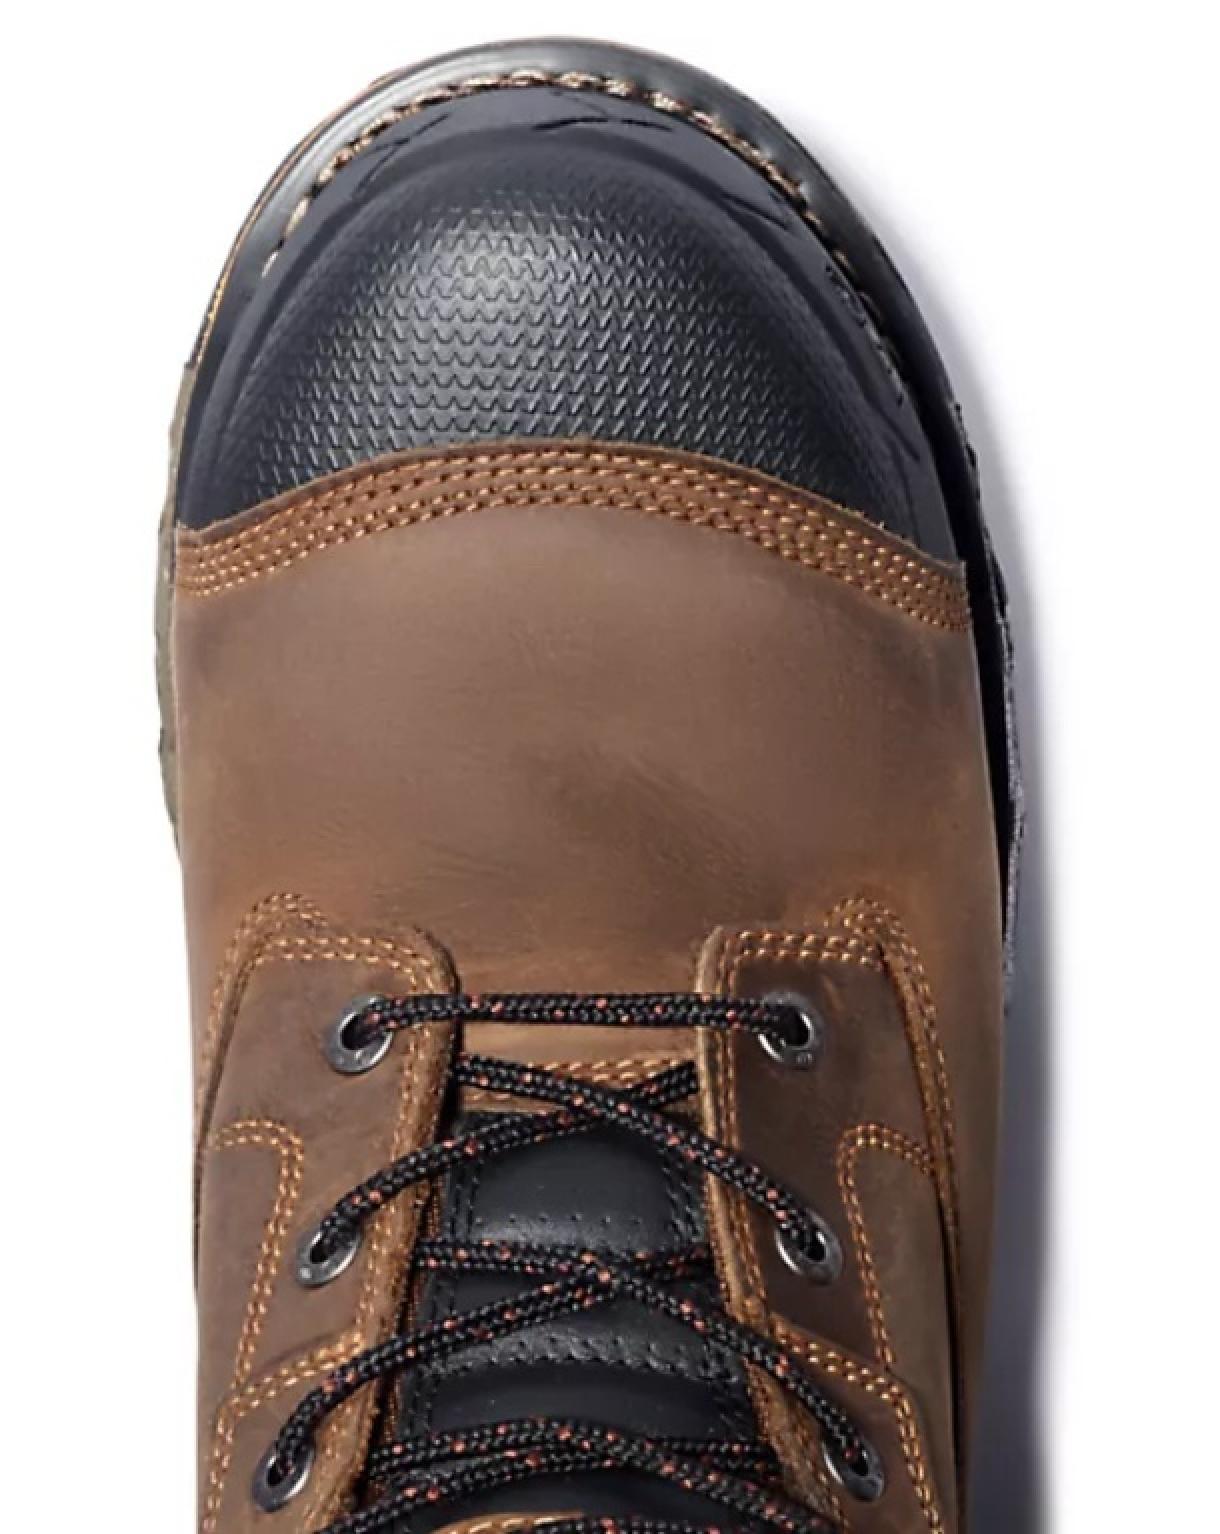 Timberland PRO Men's Boondock 6" Composite Toe Work Boots